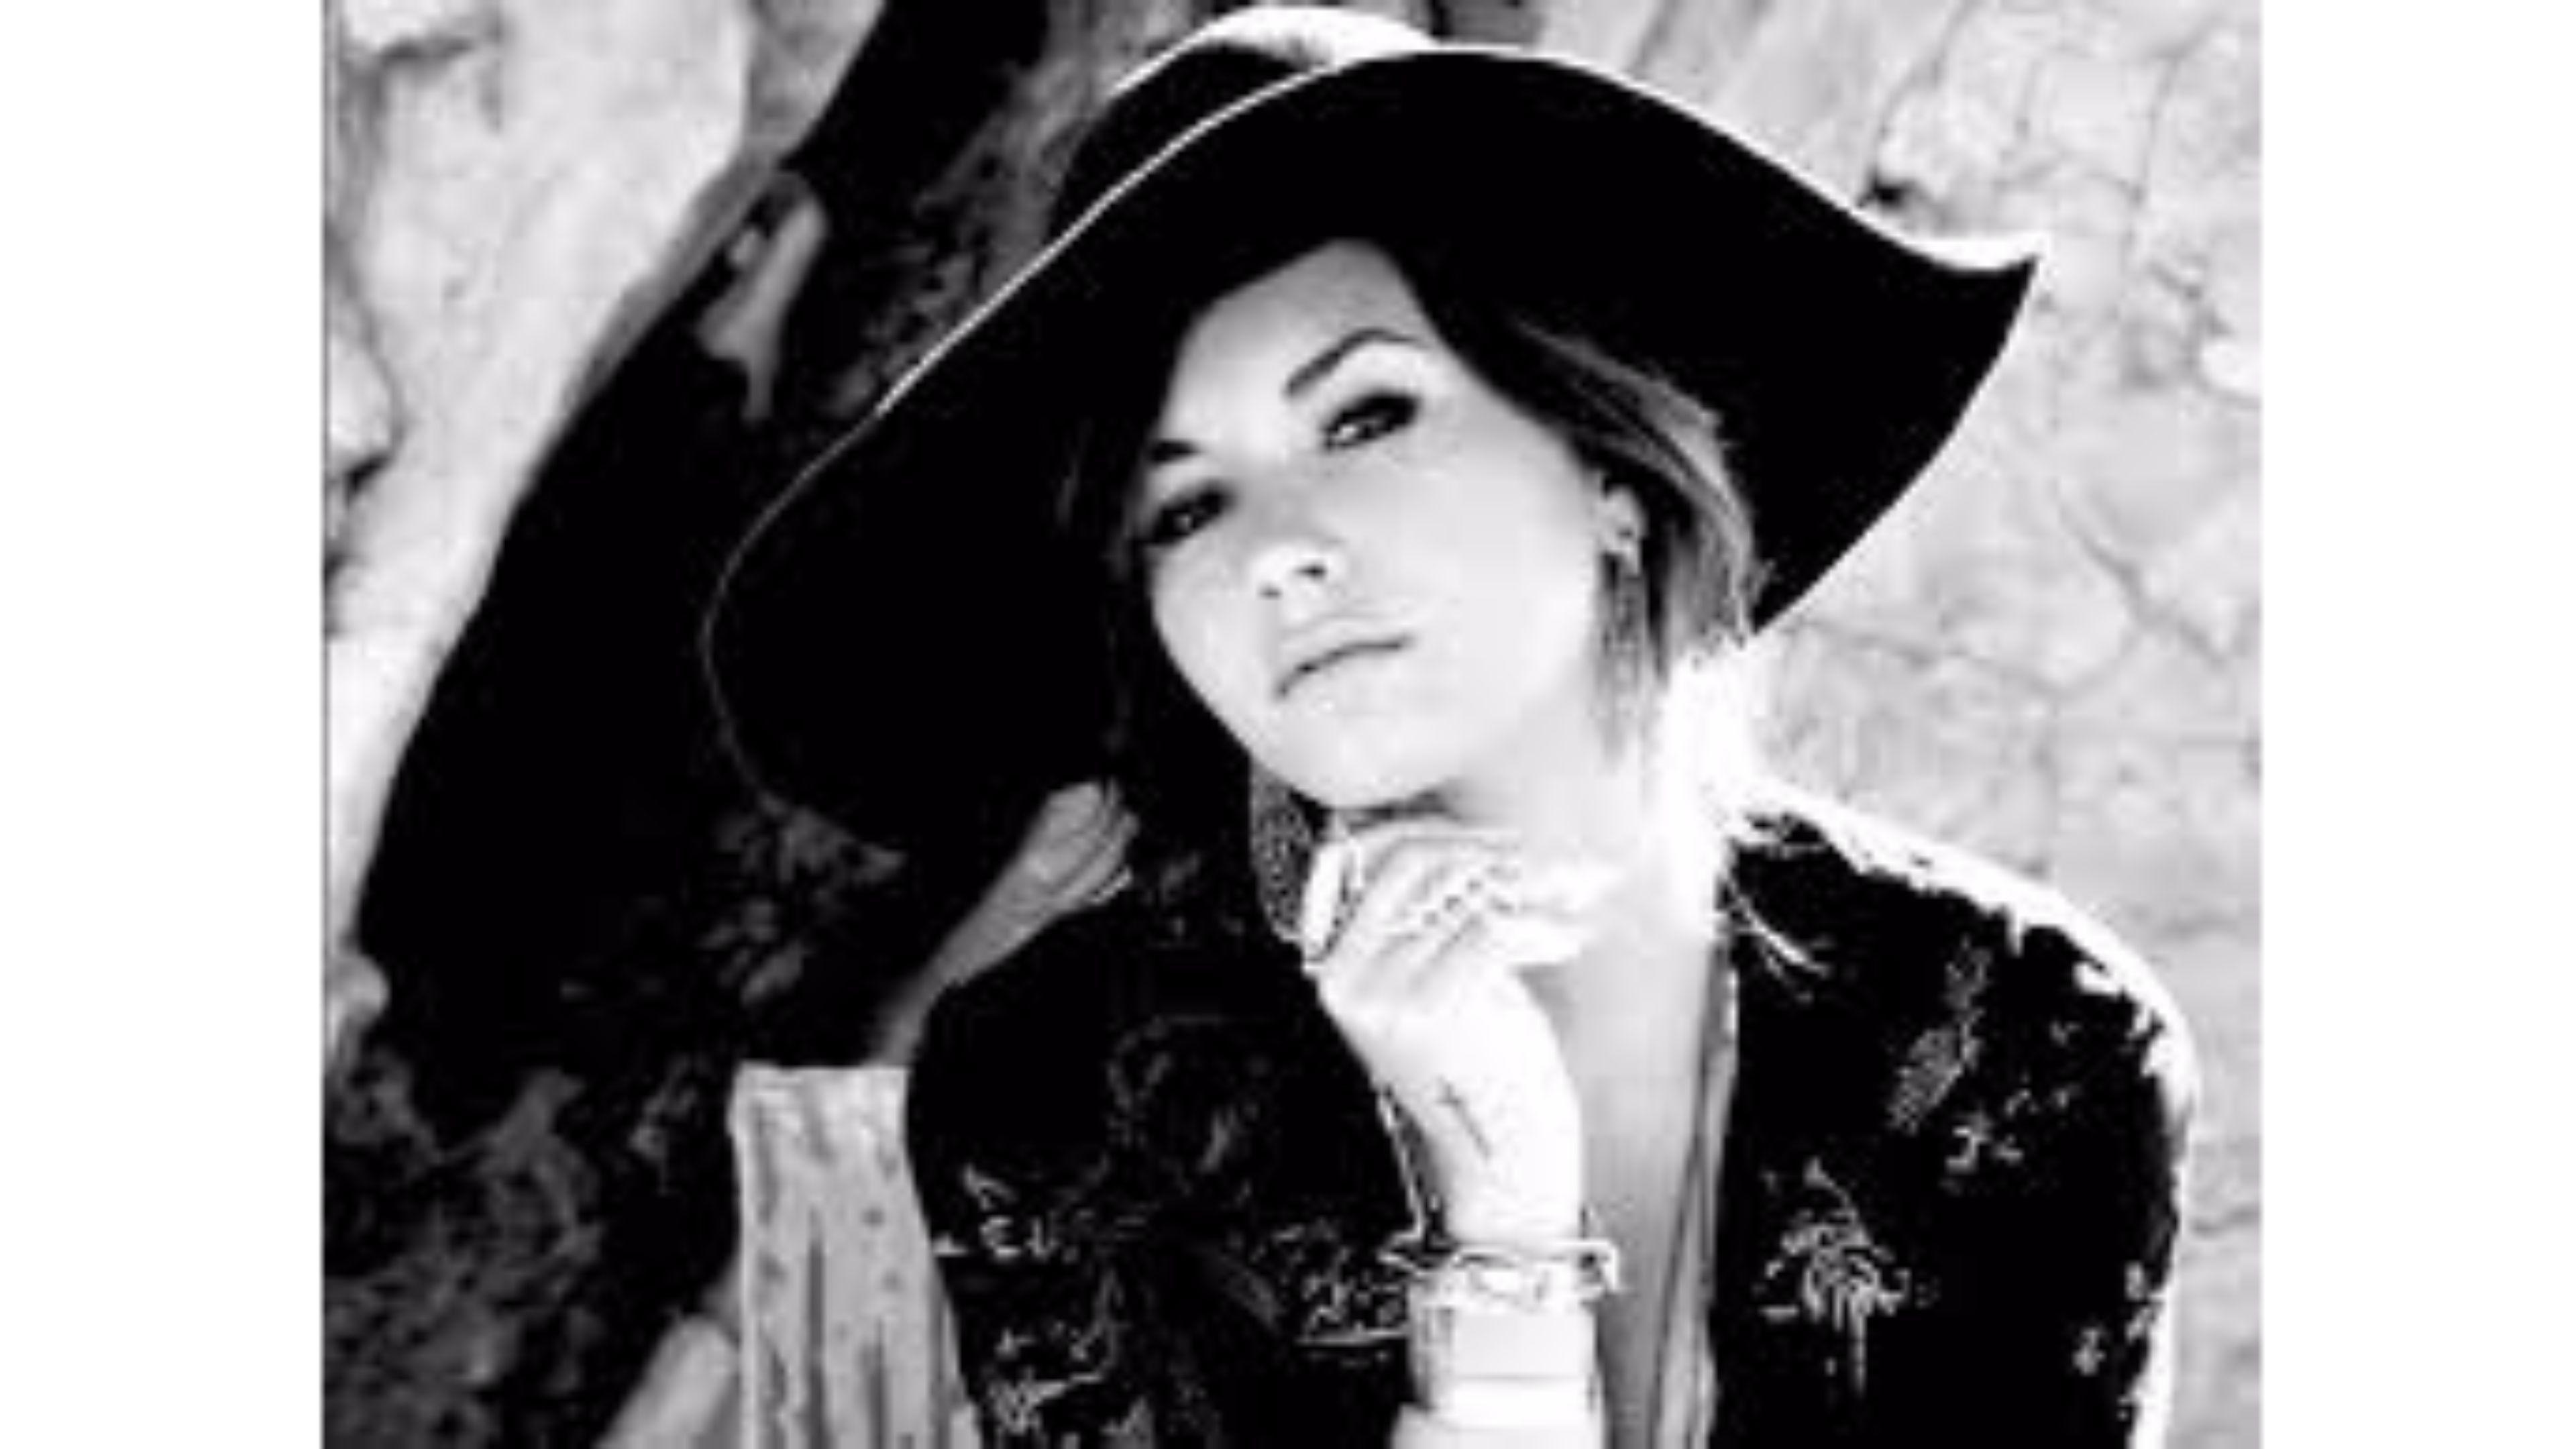 Black and White 2016 Demi Lovato 4K Wallpaper. Free 4K Wallpaper